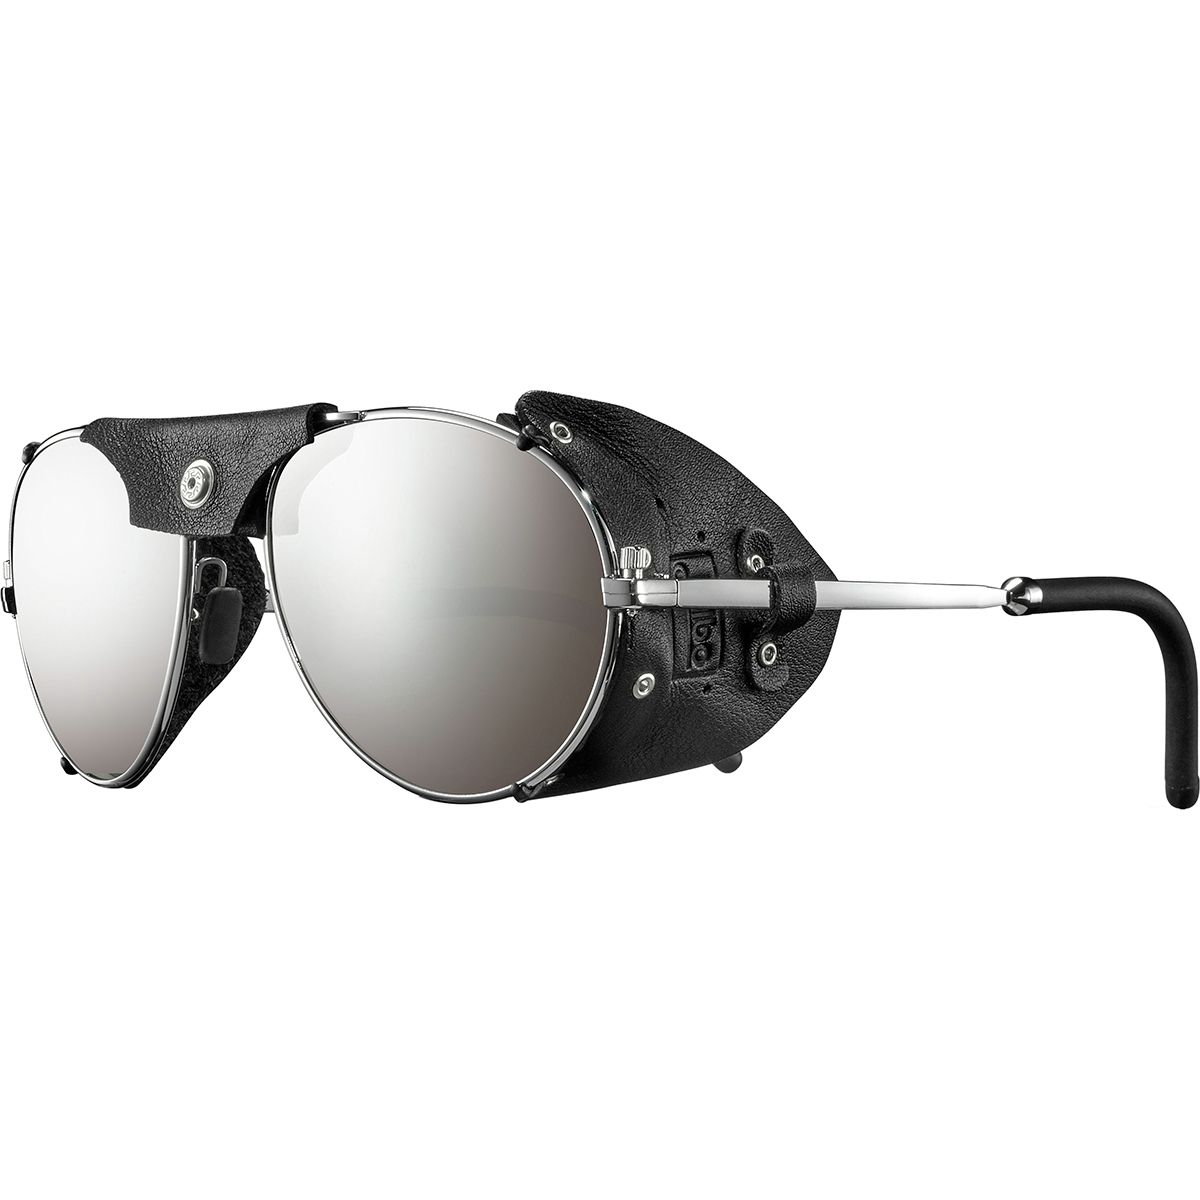 Julbo Cham Spectron 4 Sunglasses Silver/Black, One Size - Men's